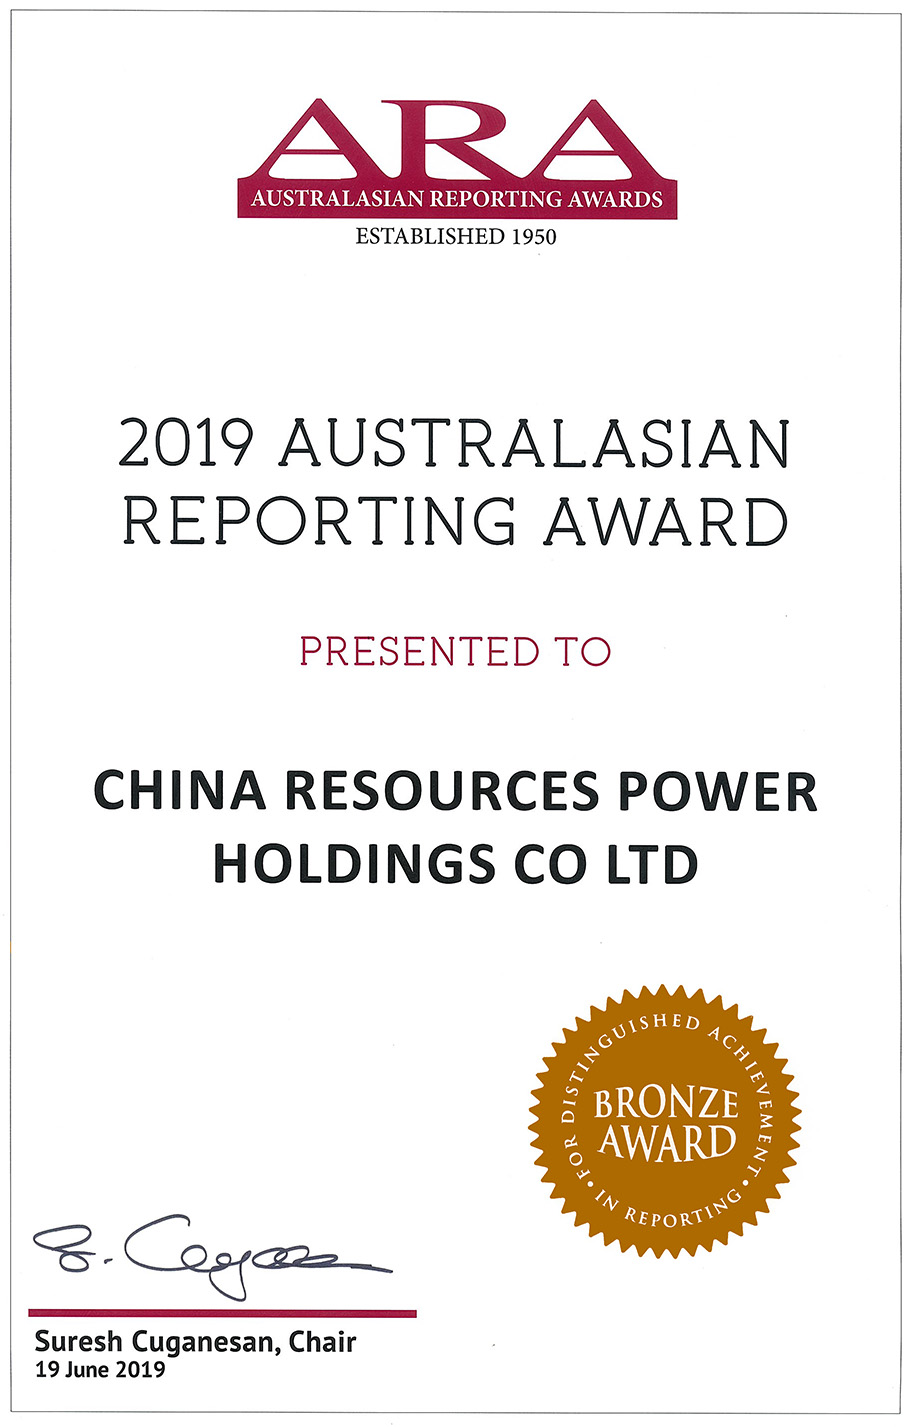 CHINA RESOURCES POWER HOLDINGS CO LTD – 2019 AUSTRALASIAN REPORTING AWARD BRONZE AWARD